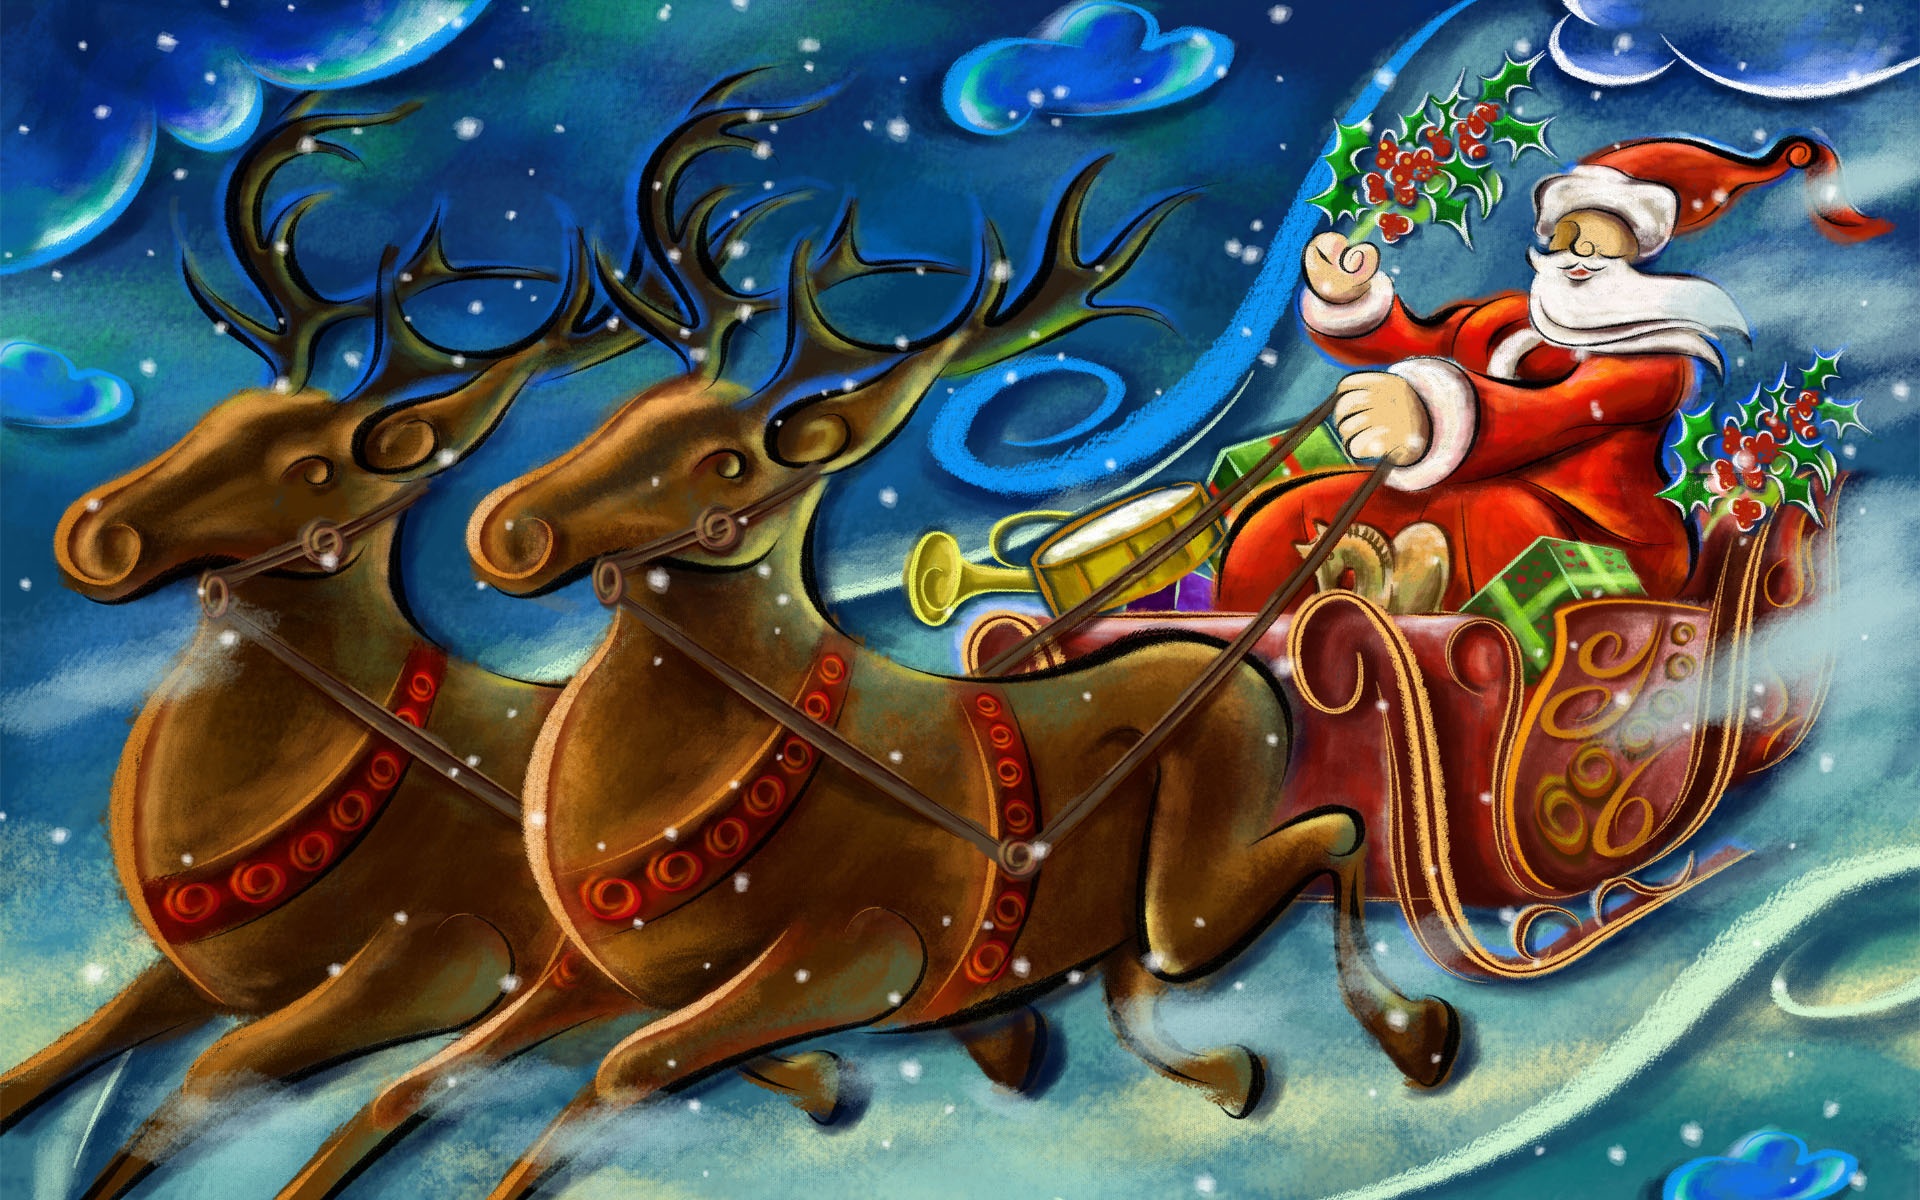 Santa Clause Creative Art Work Wallpaper In Jpg Format For